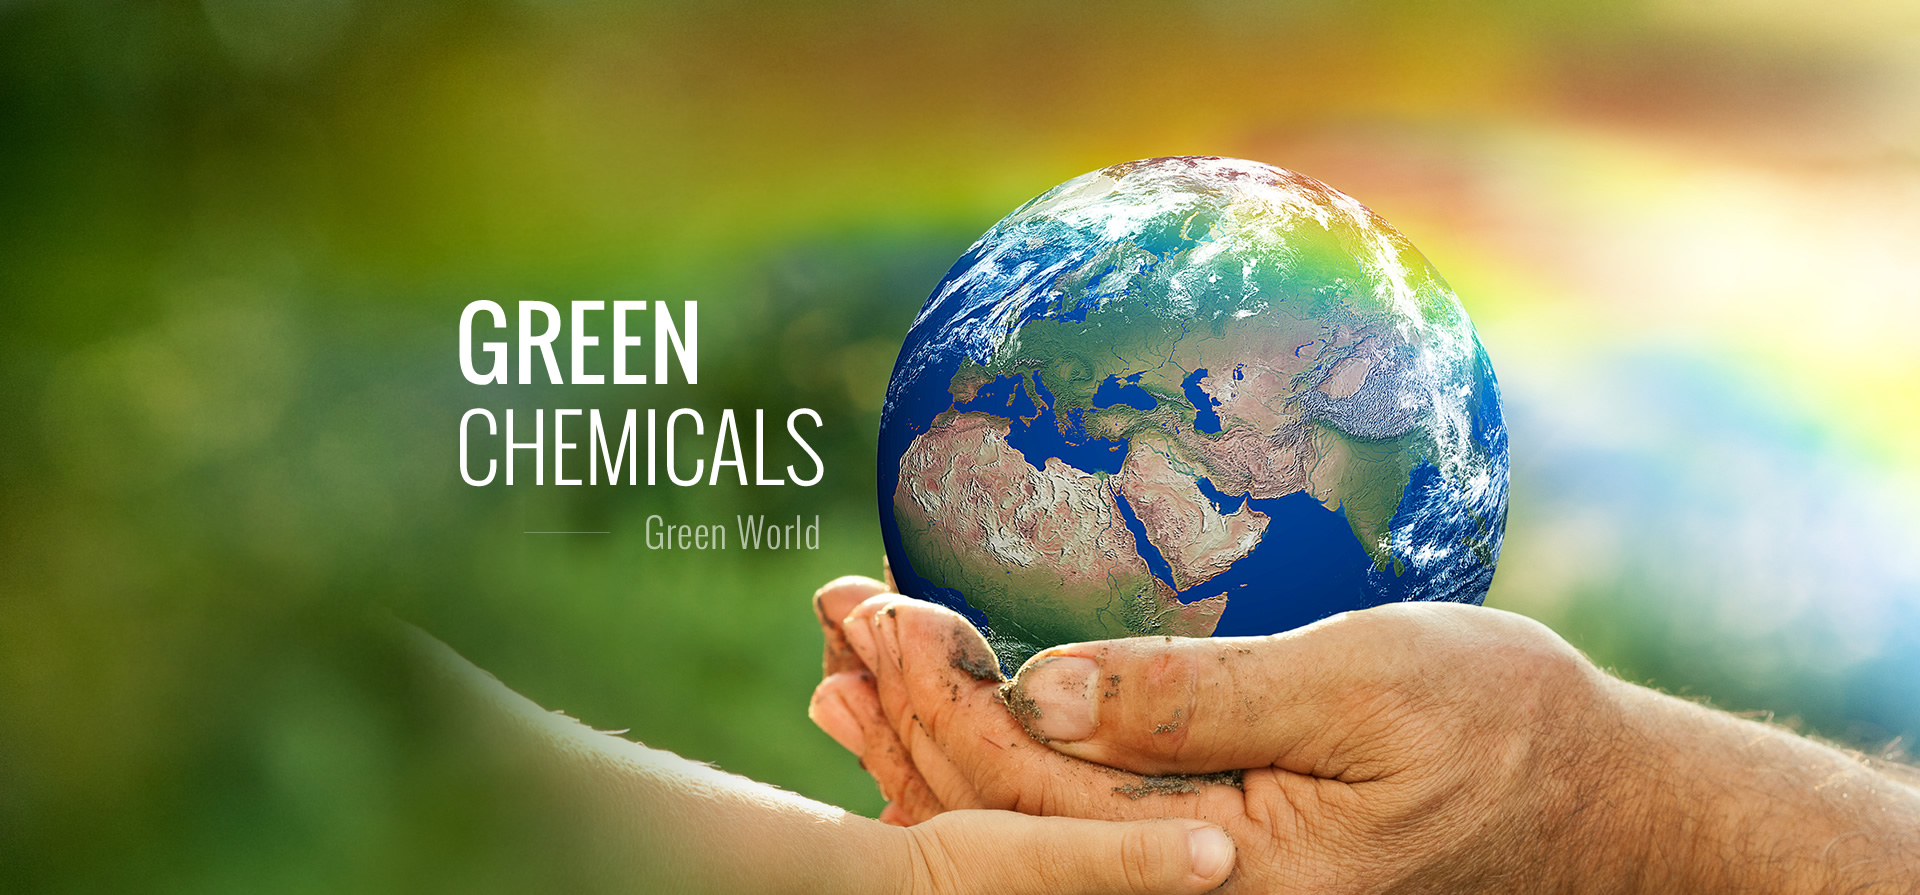 Green Chemicals, Green World